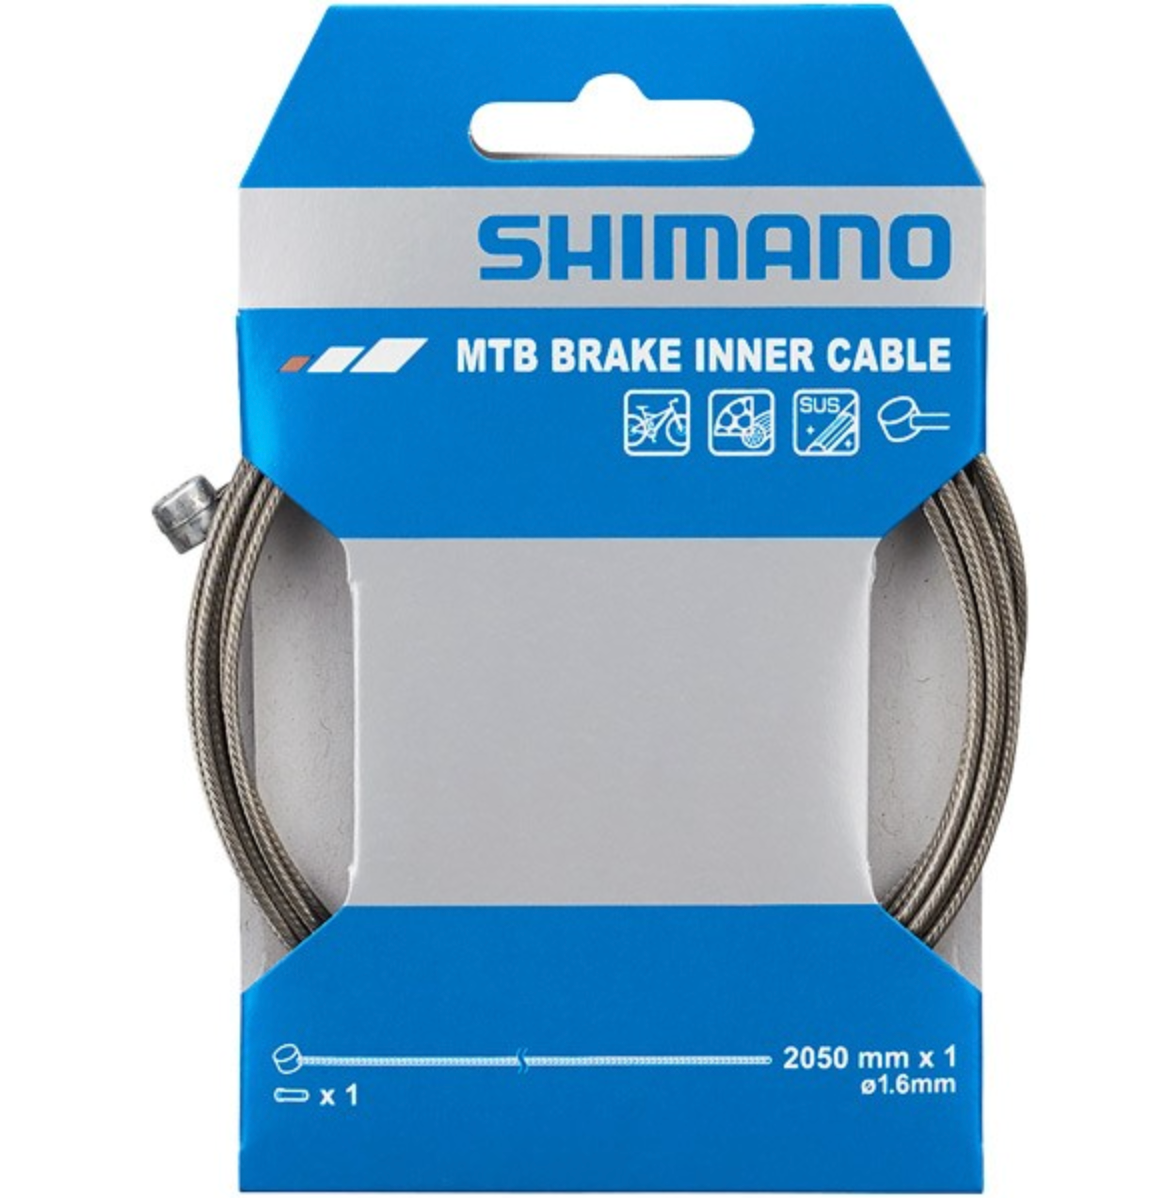 Shimano MTB / Hybrid / City / Kids Bike Brake Inner Cable